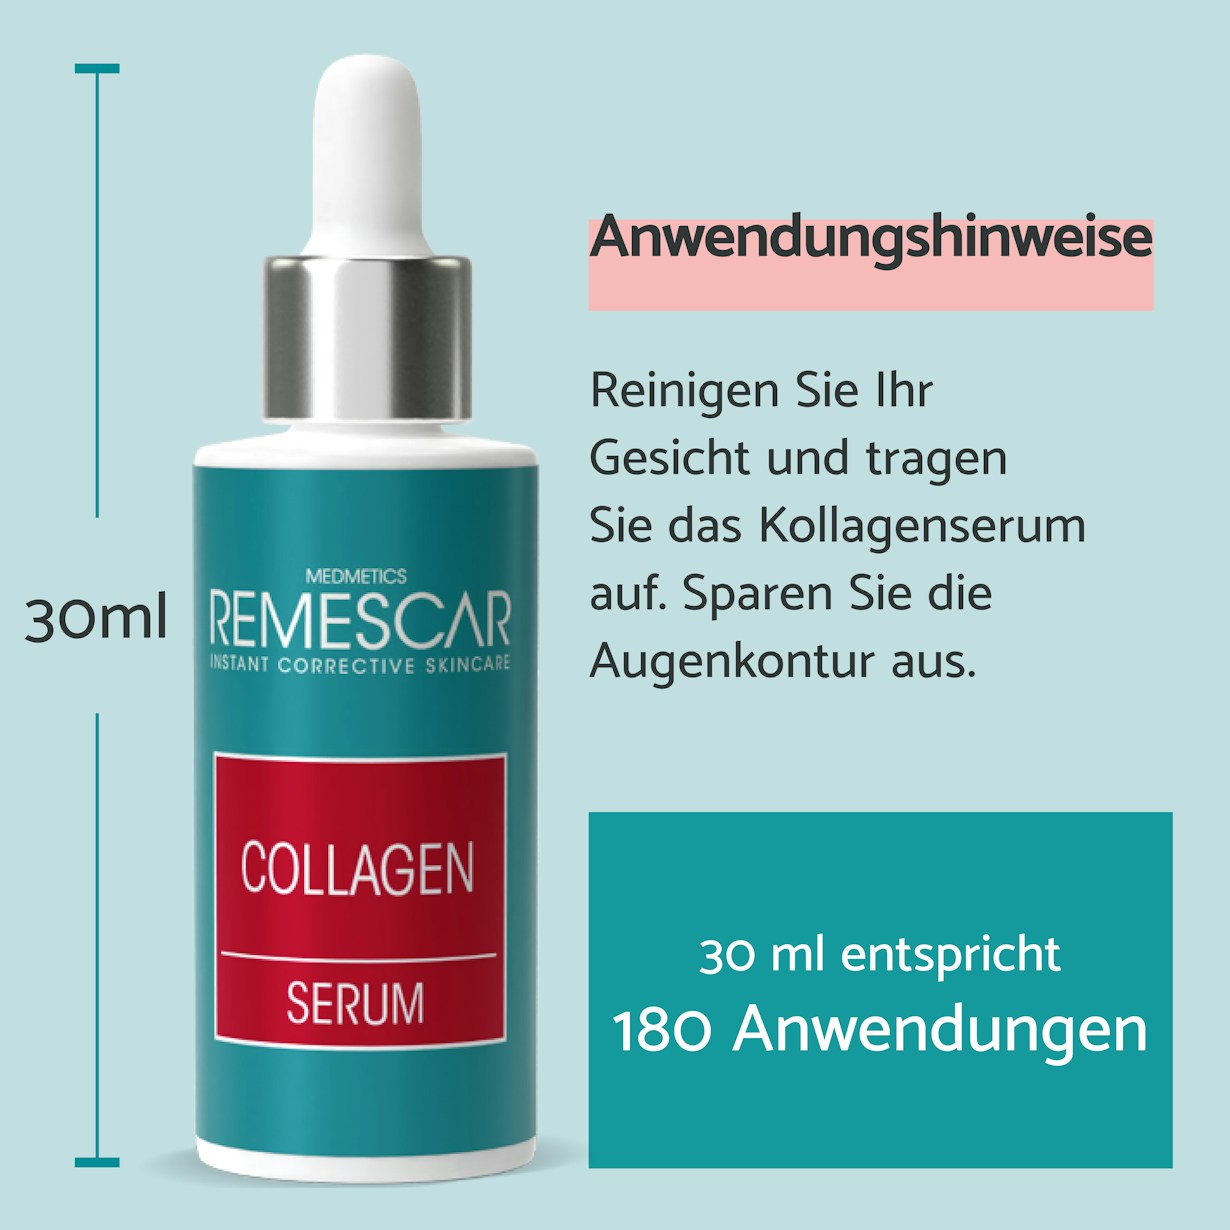 DE Collagen Serum Product Images4